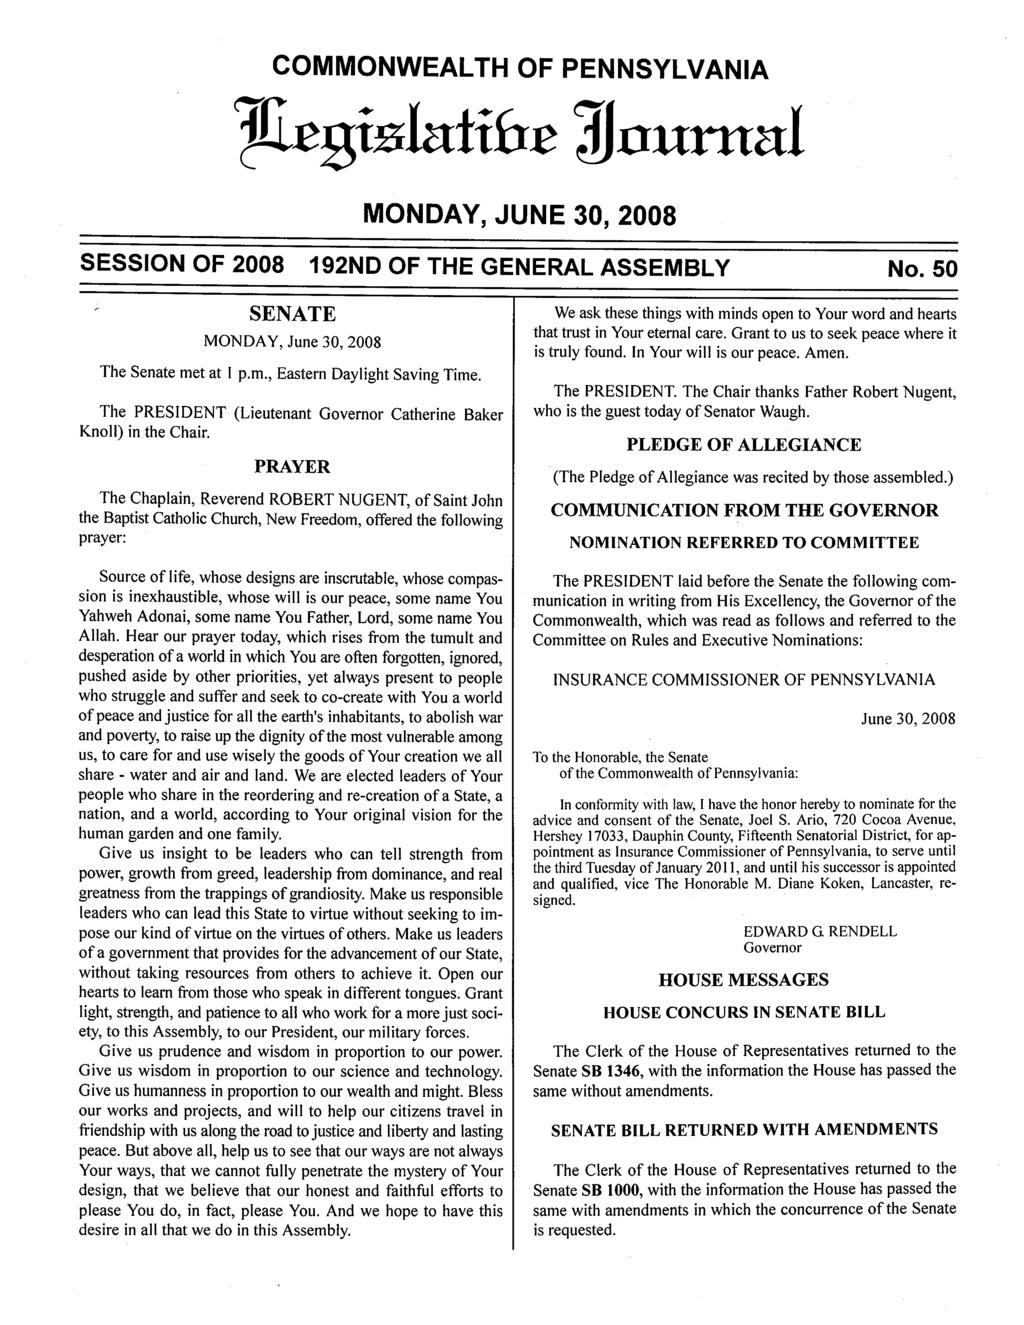 COMMONWEALTH OF PENNSYLVANIA LLrjzLafjjij jnuntai MONDAY, JUNE 30, 2008 SESSION OF 20 08 1 92ND OF THE GENERAL ASSEMBLY No. 50 SENATE MONDAY, June 30, 2008 The Senate met at I p.m., Eastern Daylight Saving Time.